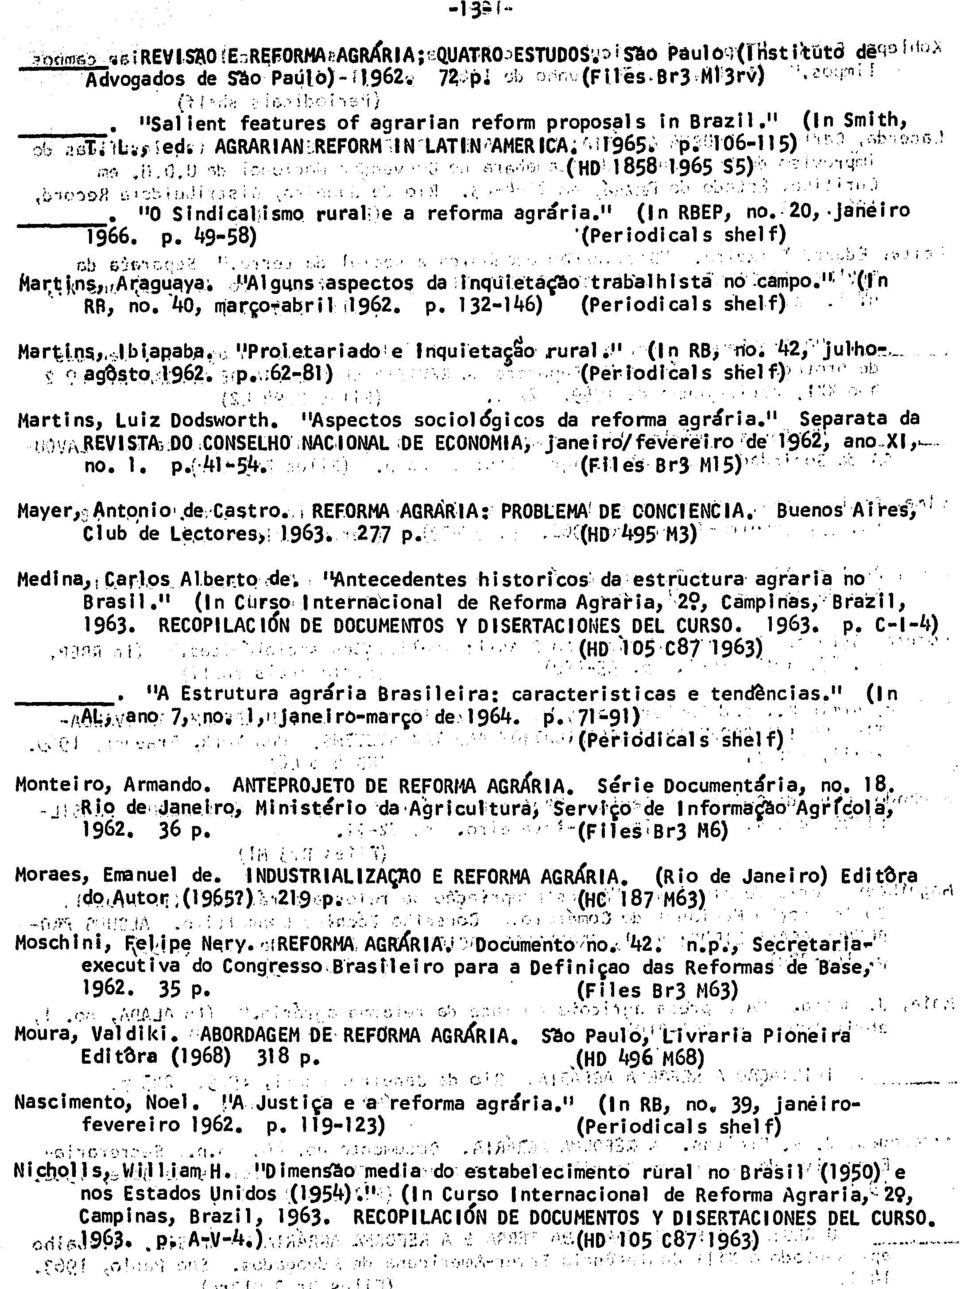 .i(HD 1858;1965 55) "0 Sindicalismo rural;)e a reforma agraria." (InRBEP, no. 20, Ja-eiro '(Periodicals shelf) 1966. p. 49-58) Ilar tnj,,araguaya.